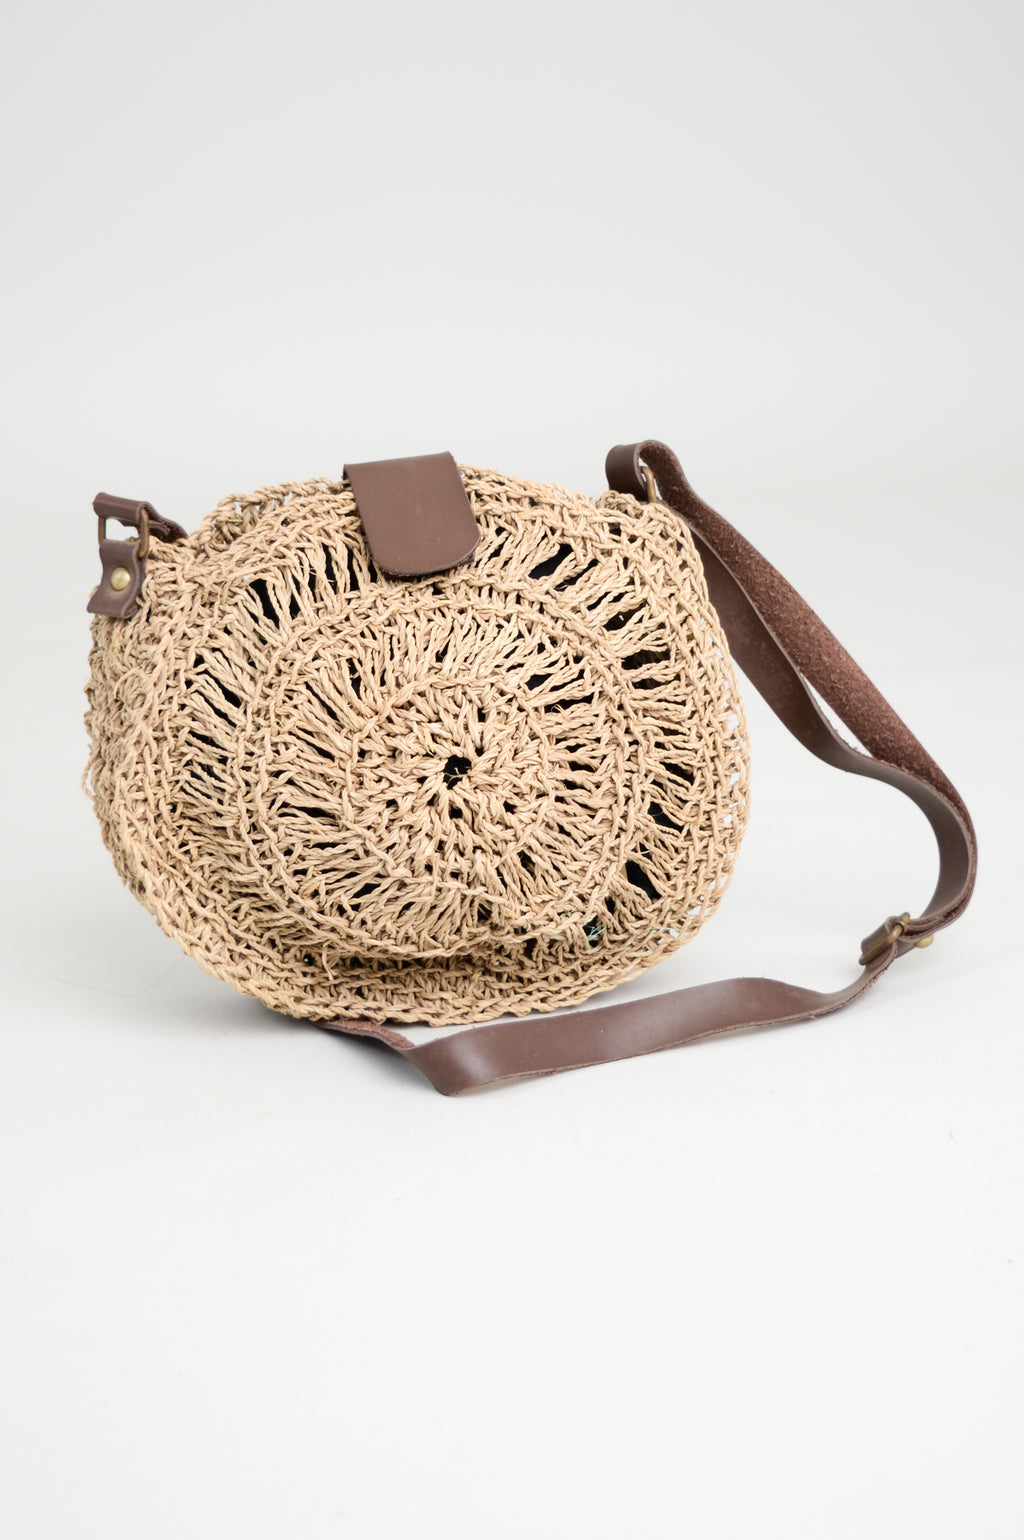 Anthropologie Top Handle Round Rattan Wicker Purse Crossbody Bag with Handle  NWT | eBay